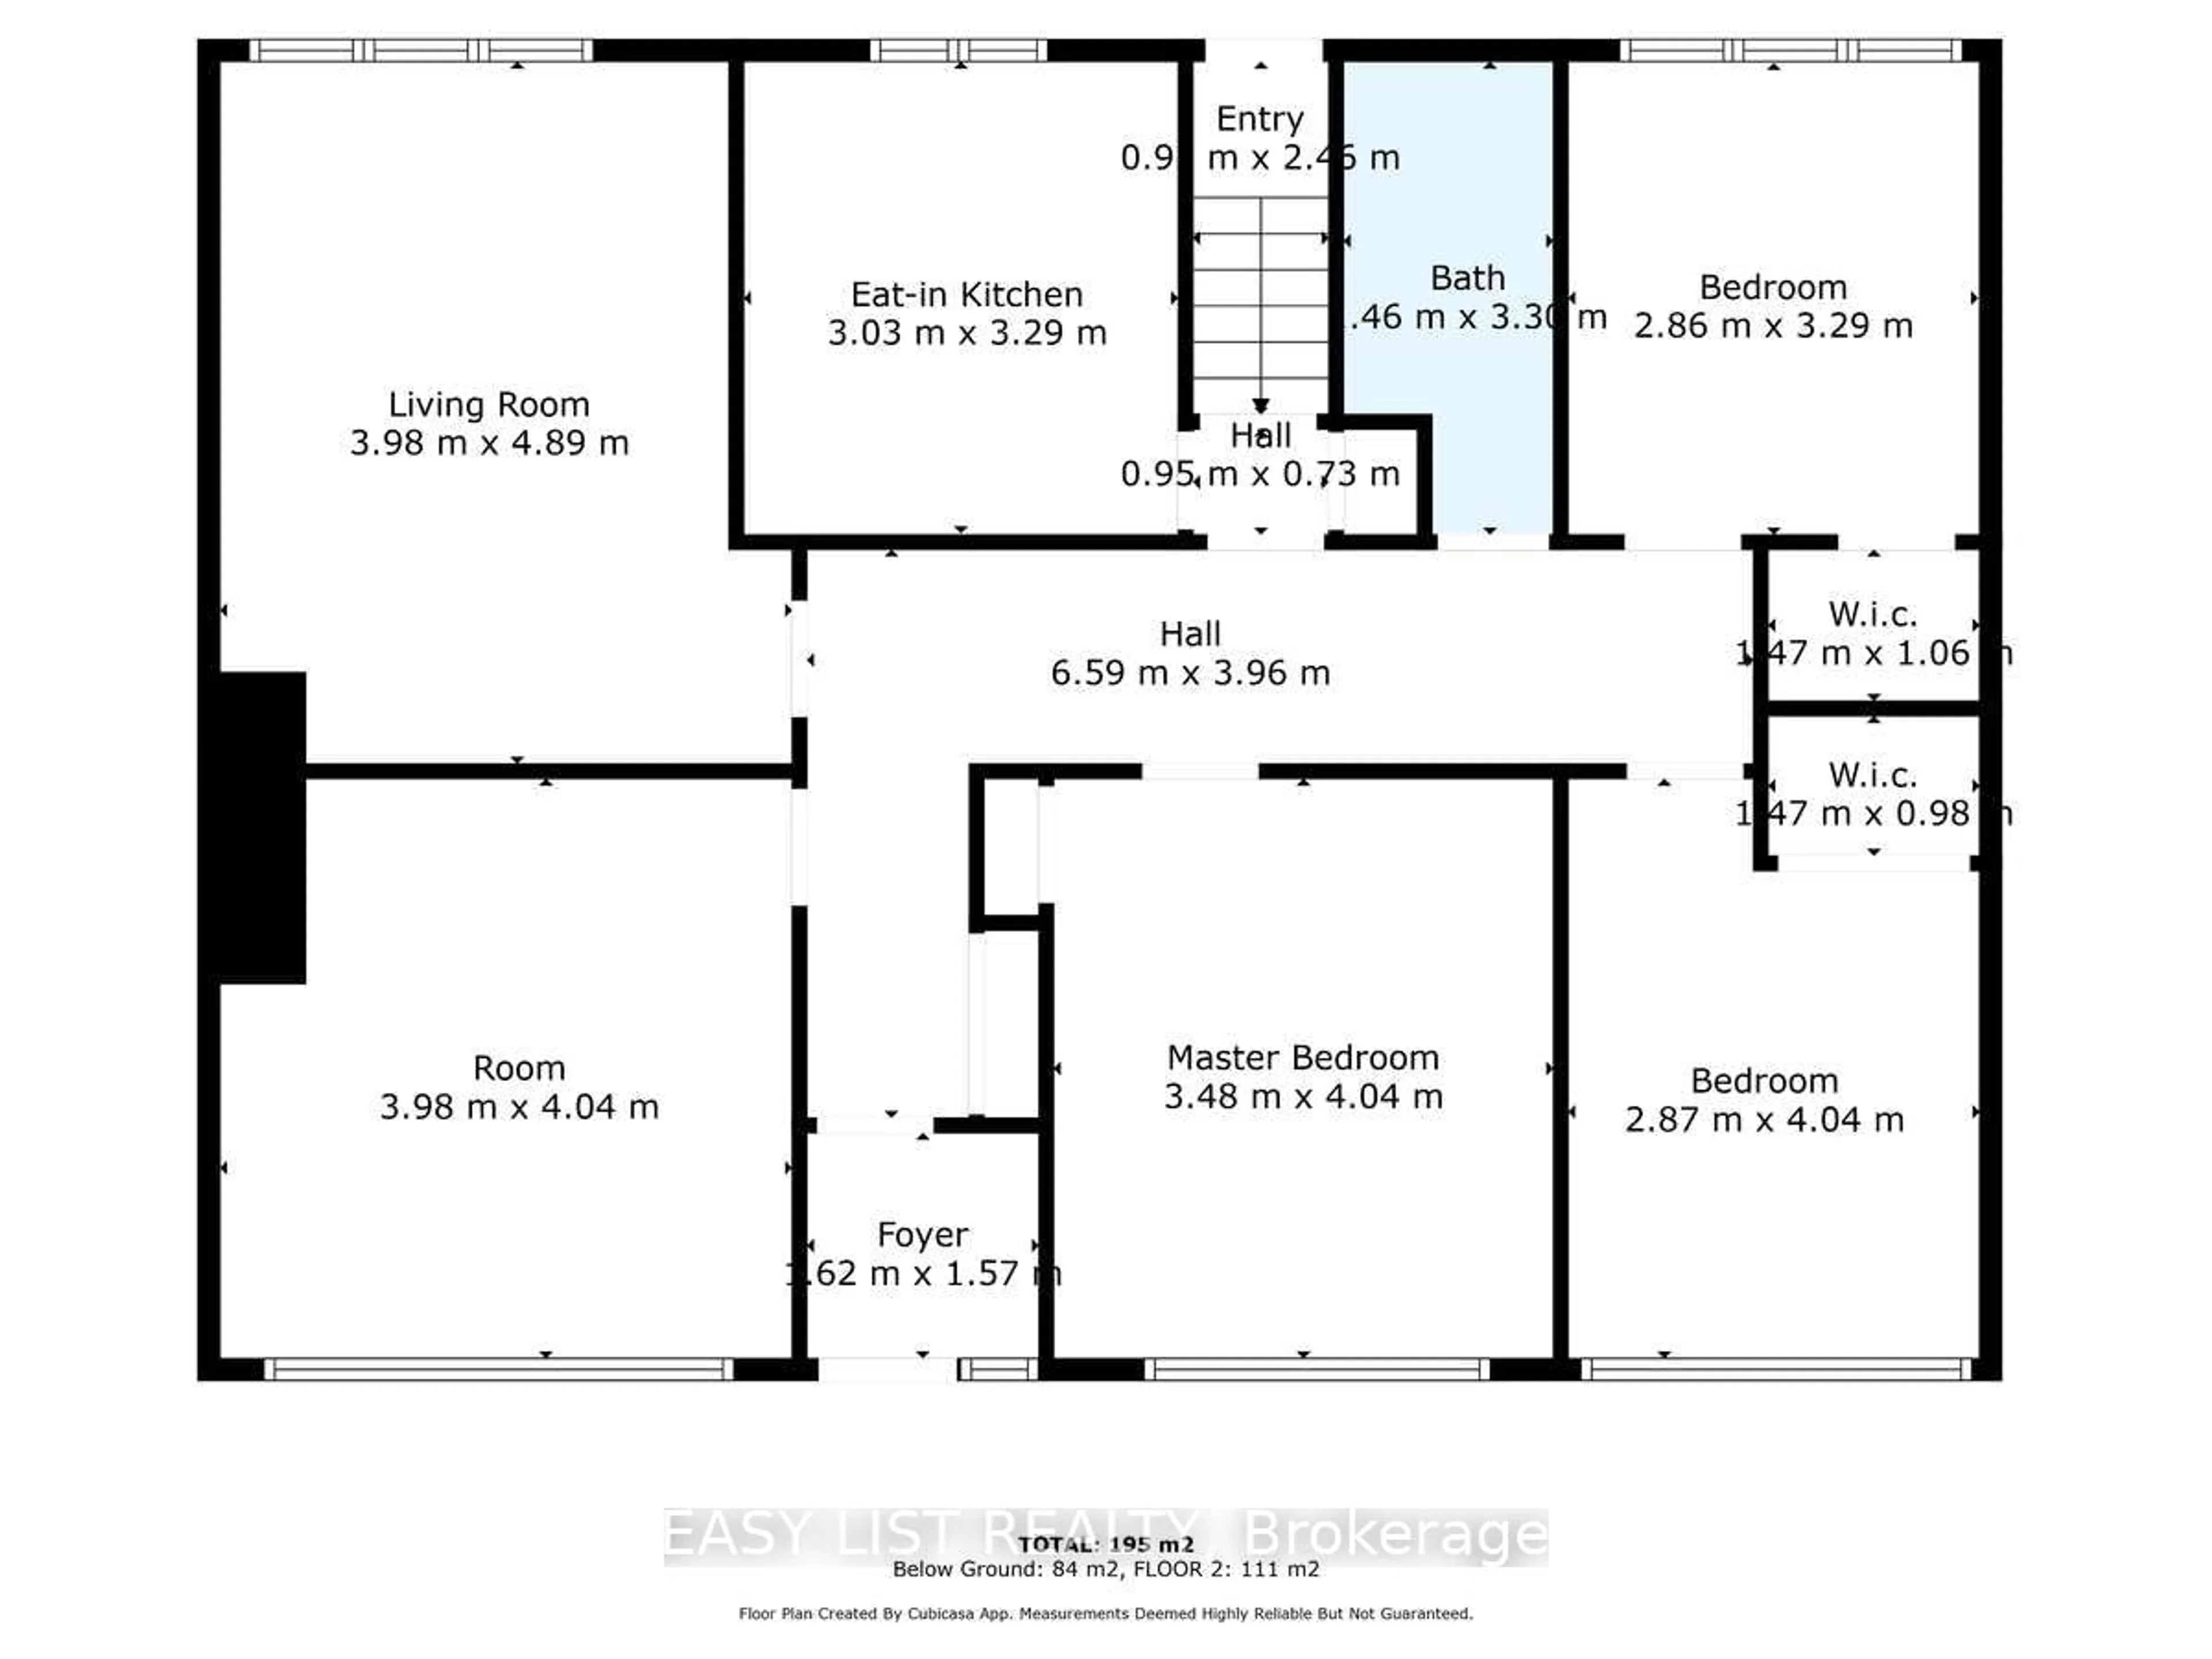 Floor plan for 195 Senlac Rd, Toronto Ontario M2R 1P3